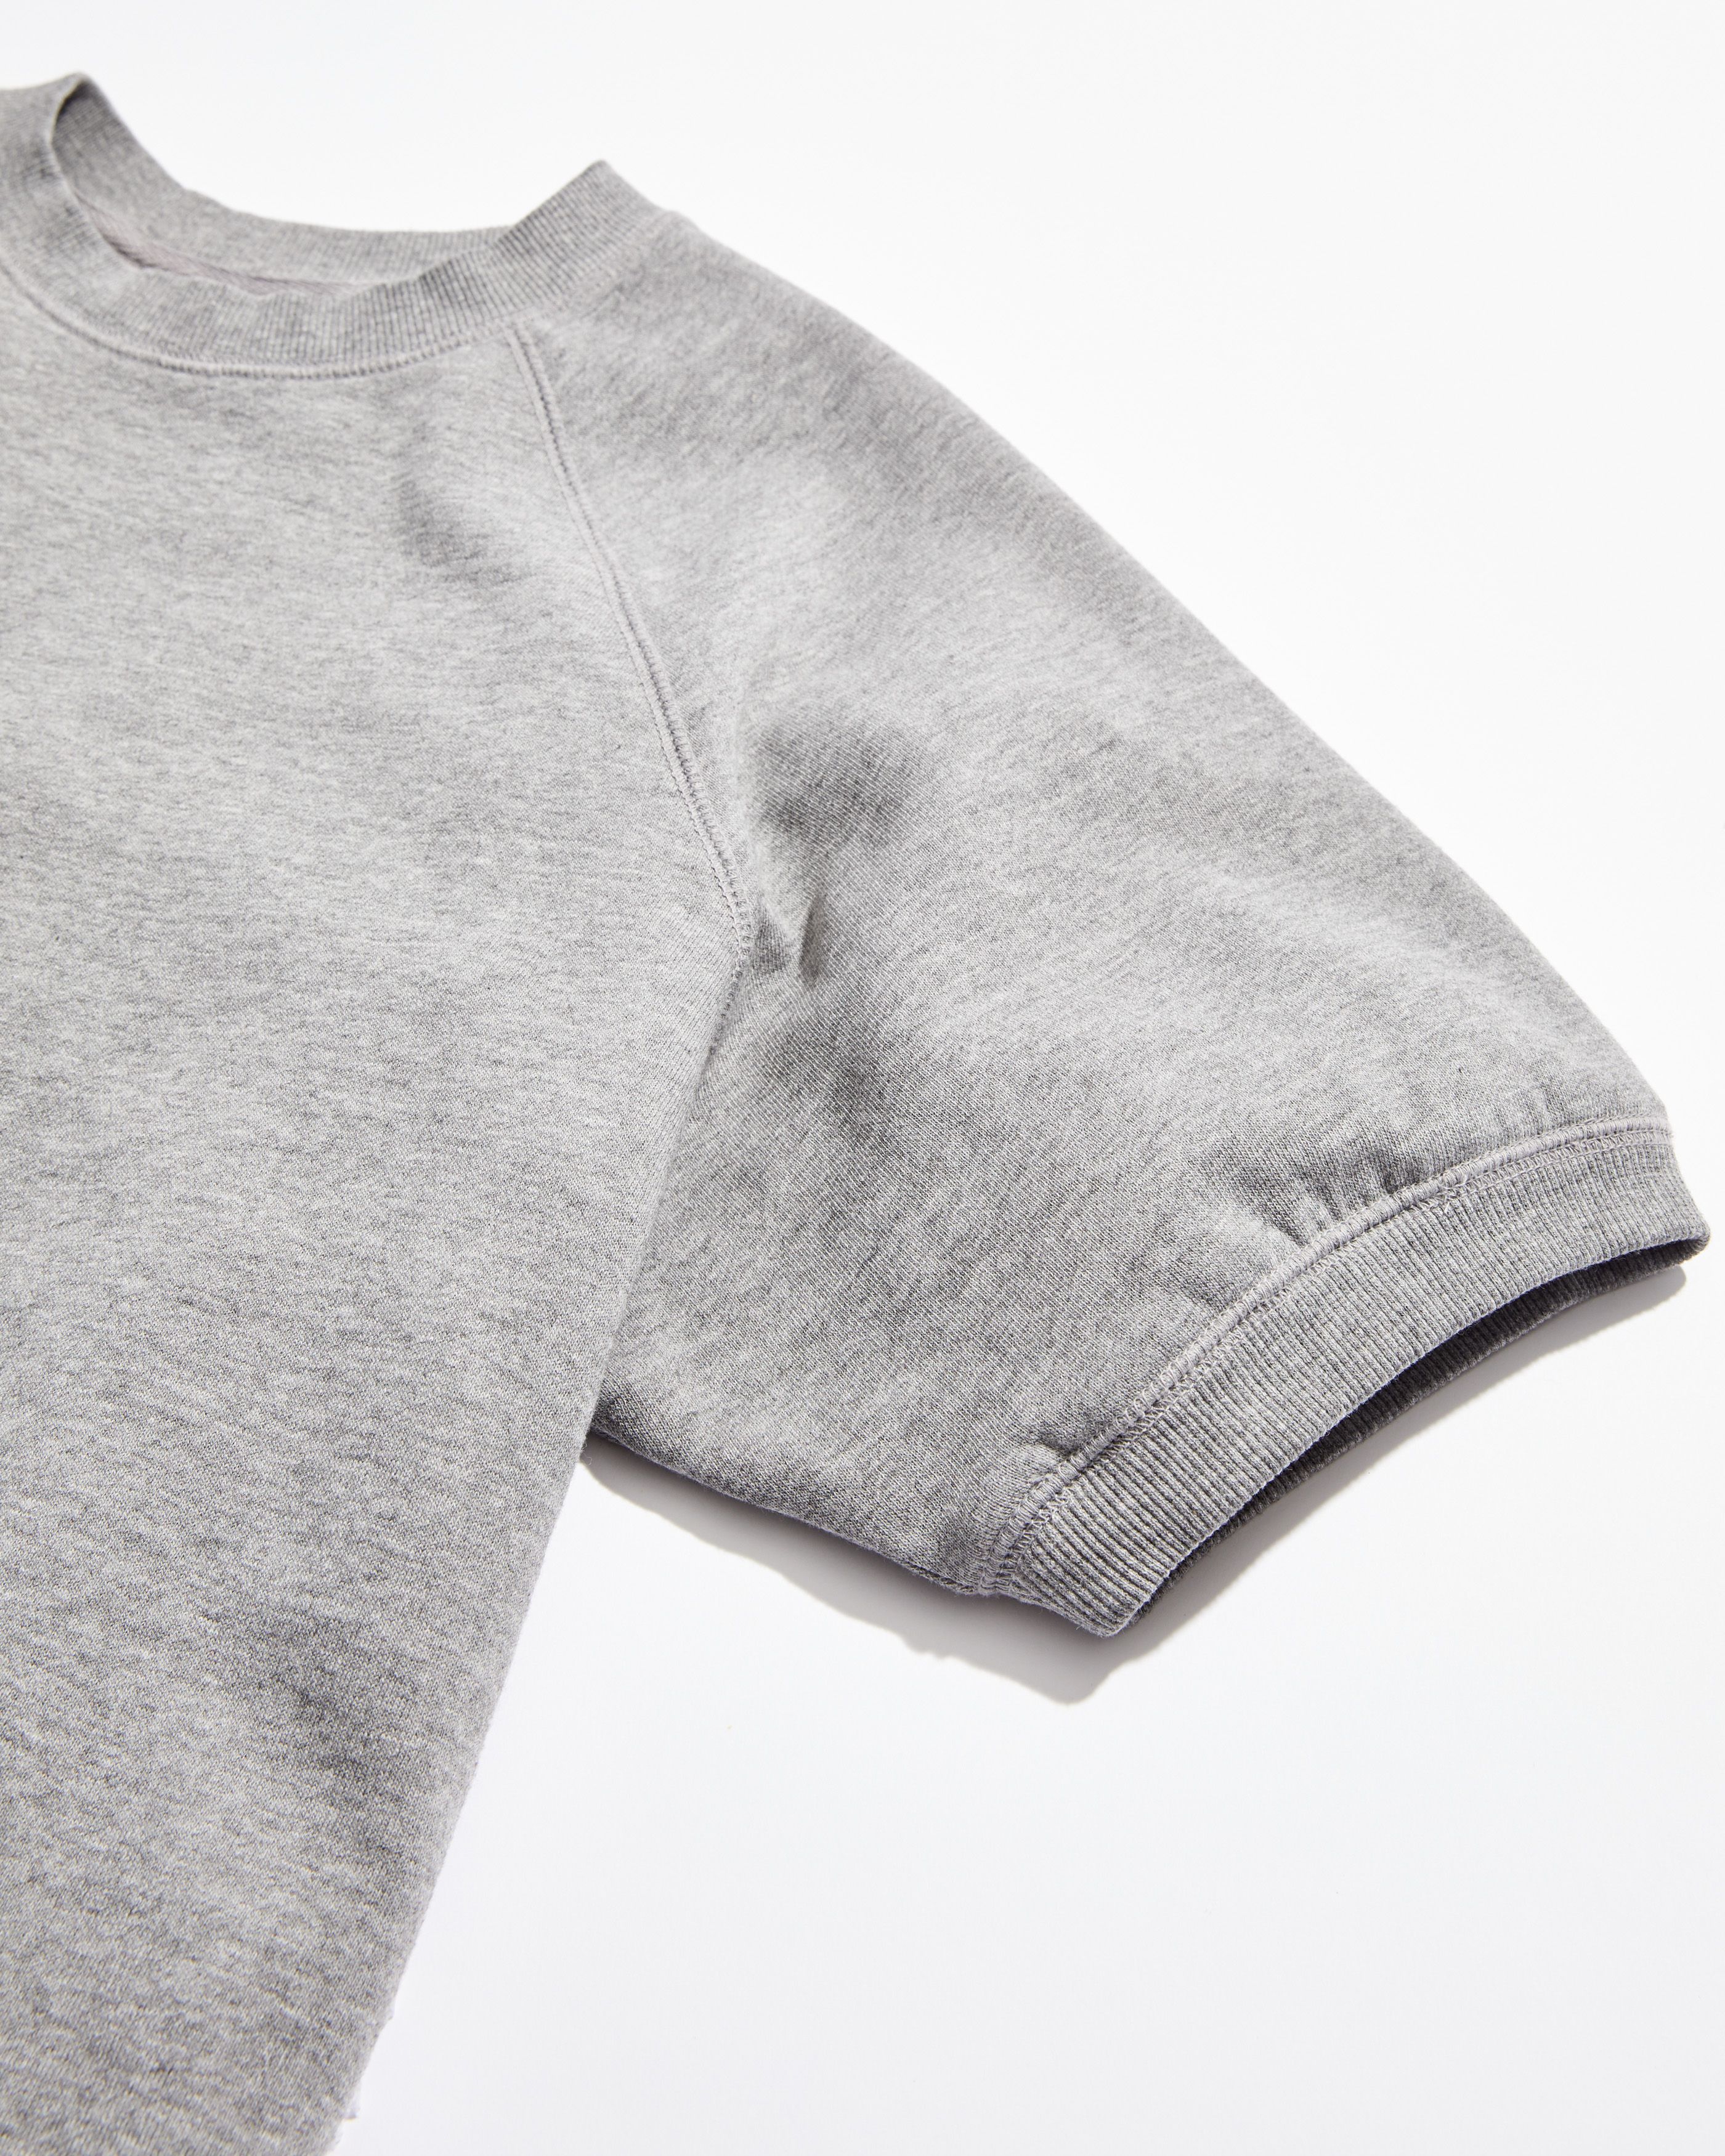 Richer Poorer Raglan Short Sleeve Sweatshirt Review - Best Short Sleeve  Sweatshirts for Men